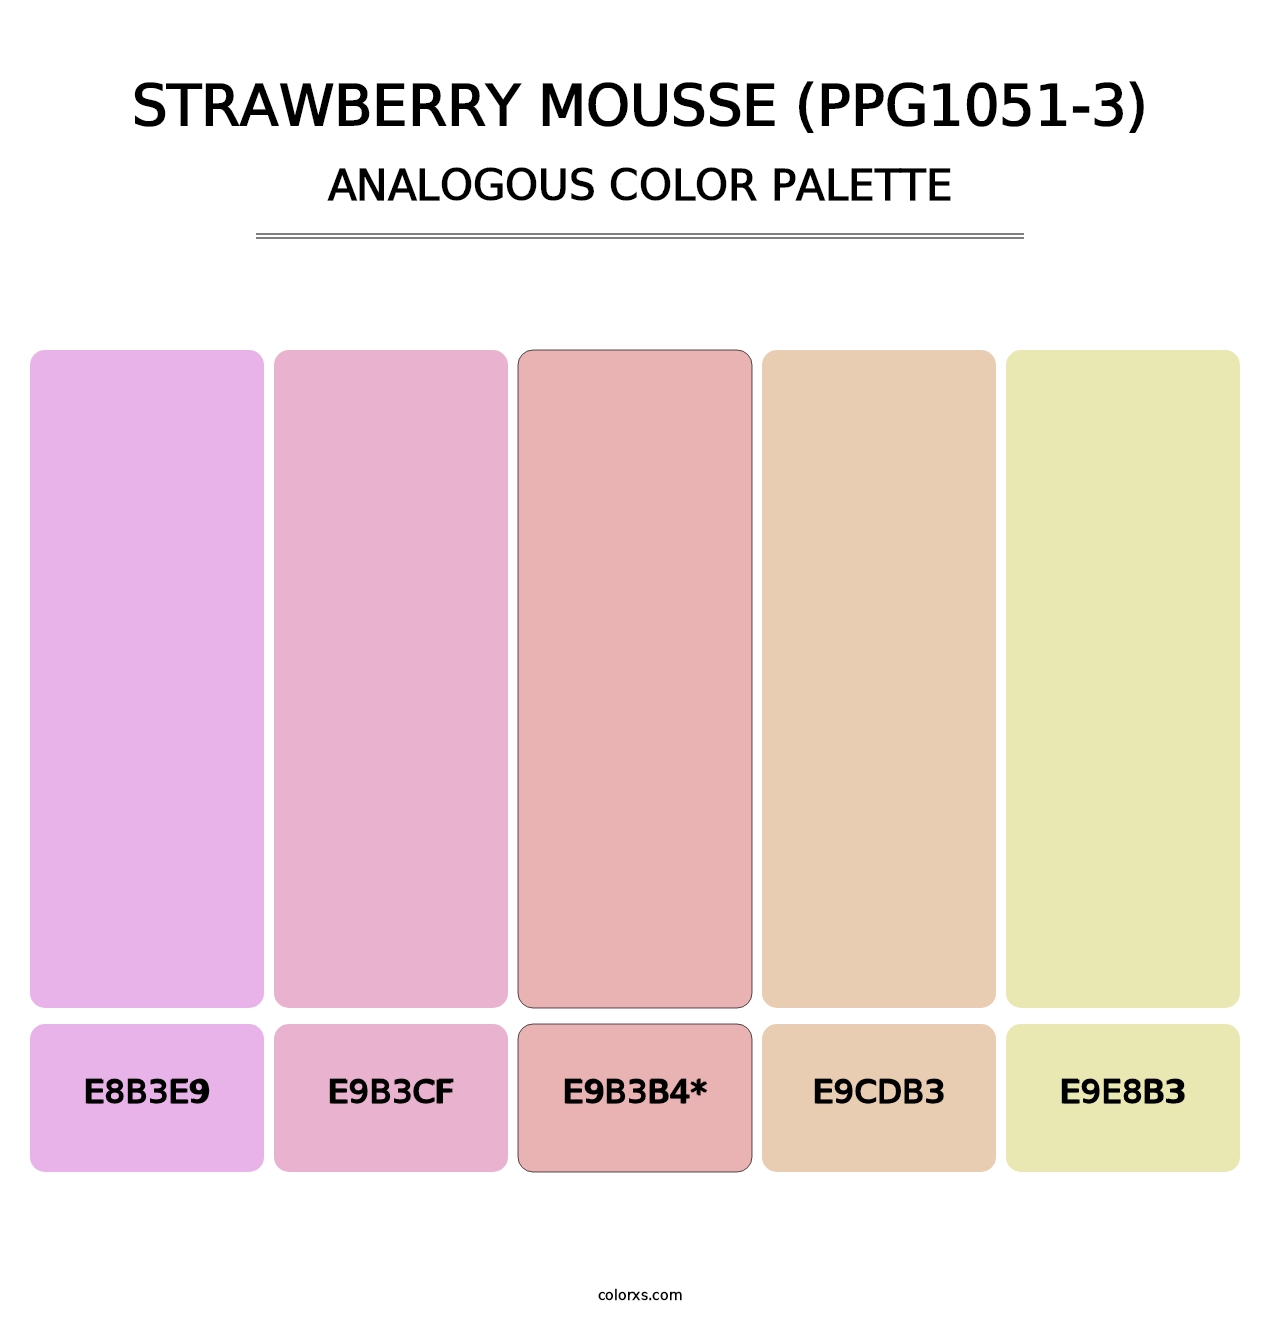 Strawberry Mousse (PPG1051-3) - Analogous Color Palette